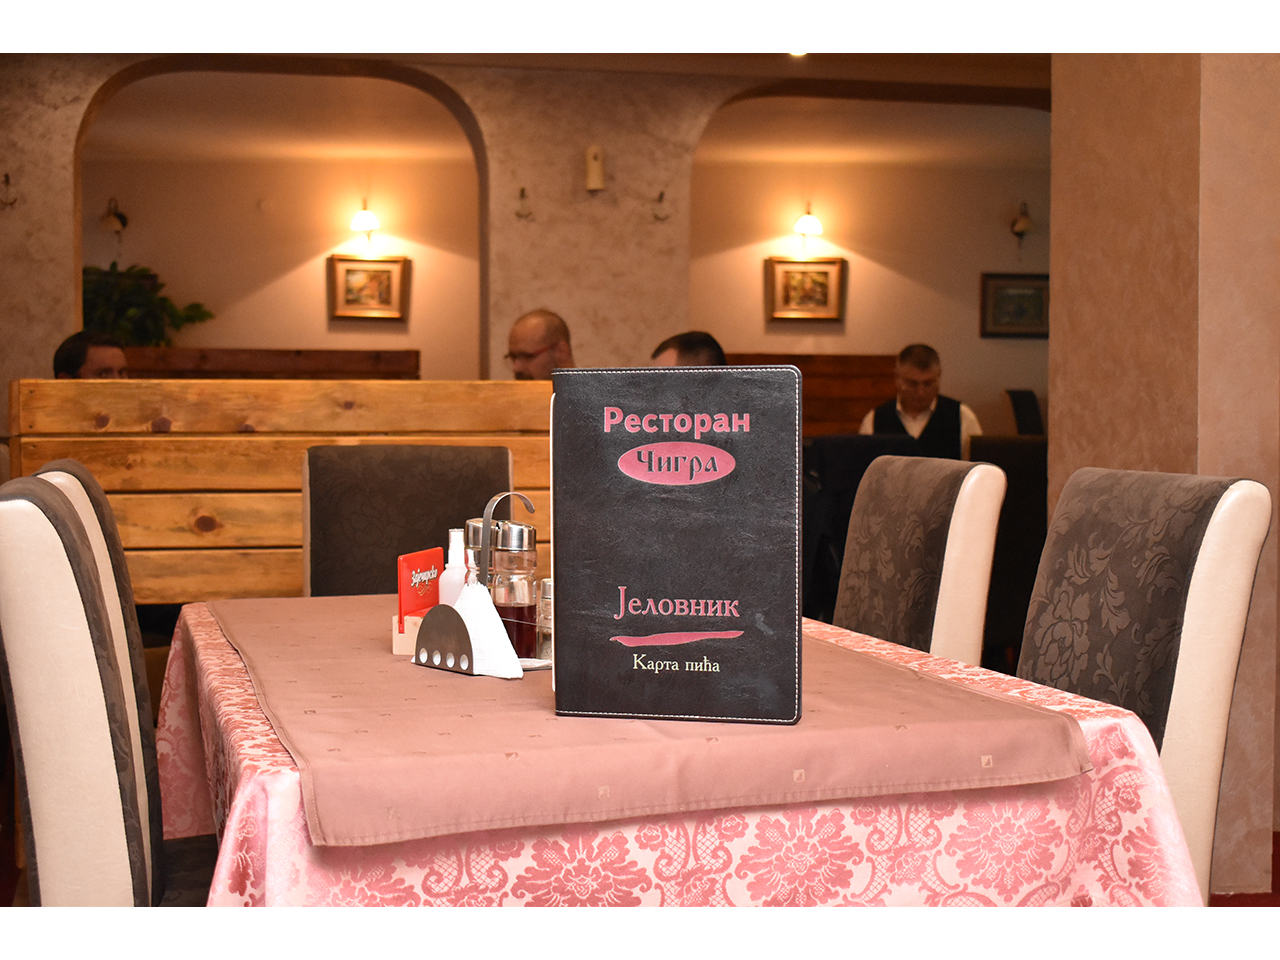 CIGRA - DOMESTIC CUISINE RESTAURANT Restaurants for weddings, celebrations Beograd